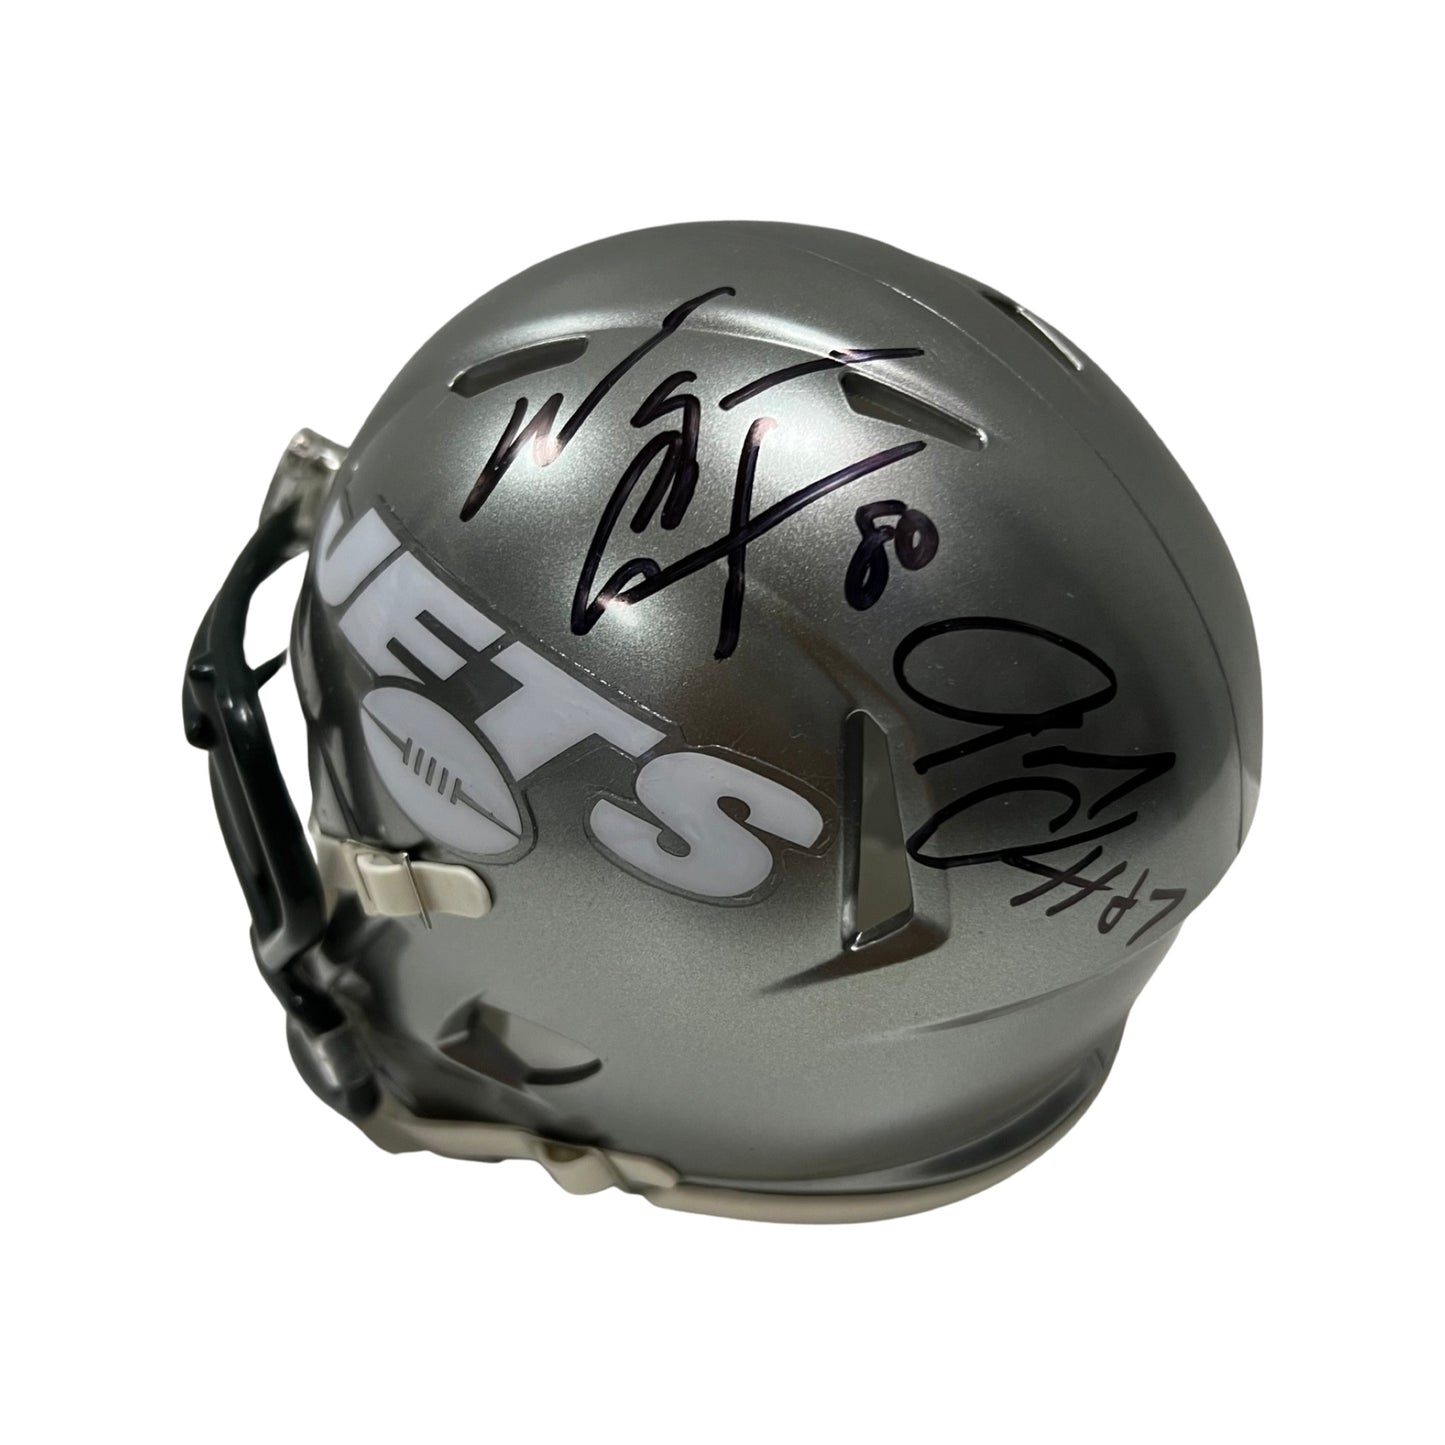 Wayne Chrebet & Laveranues Coles Autographed New York Jets Flash Mini Helmet Steiner CX